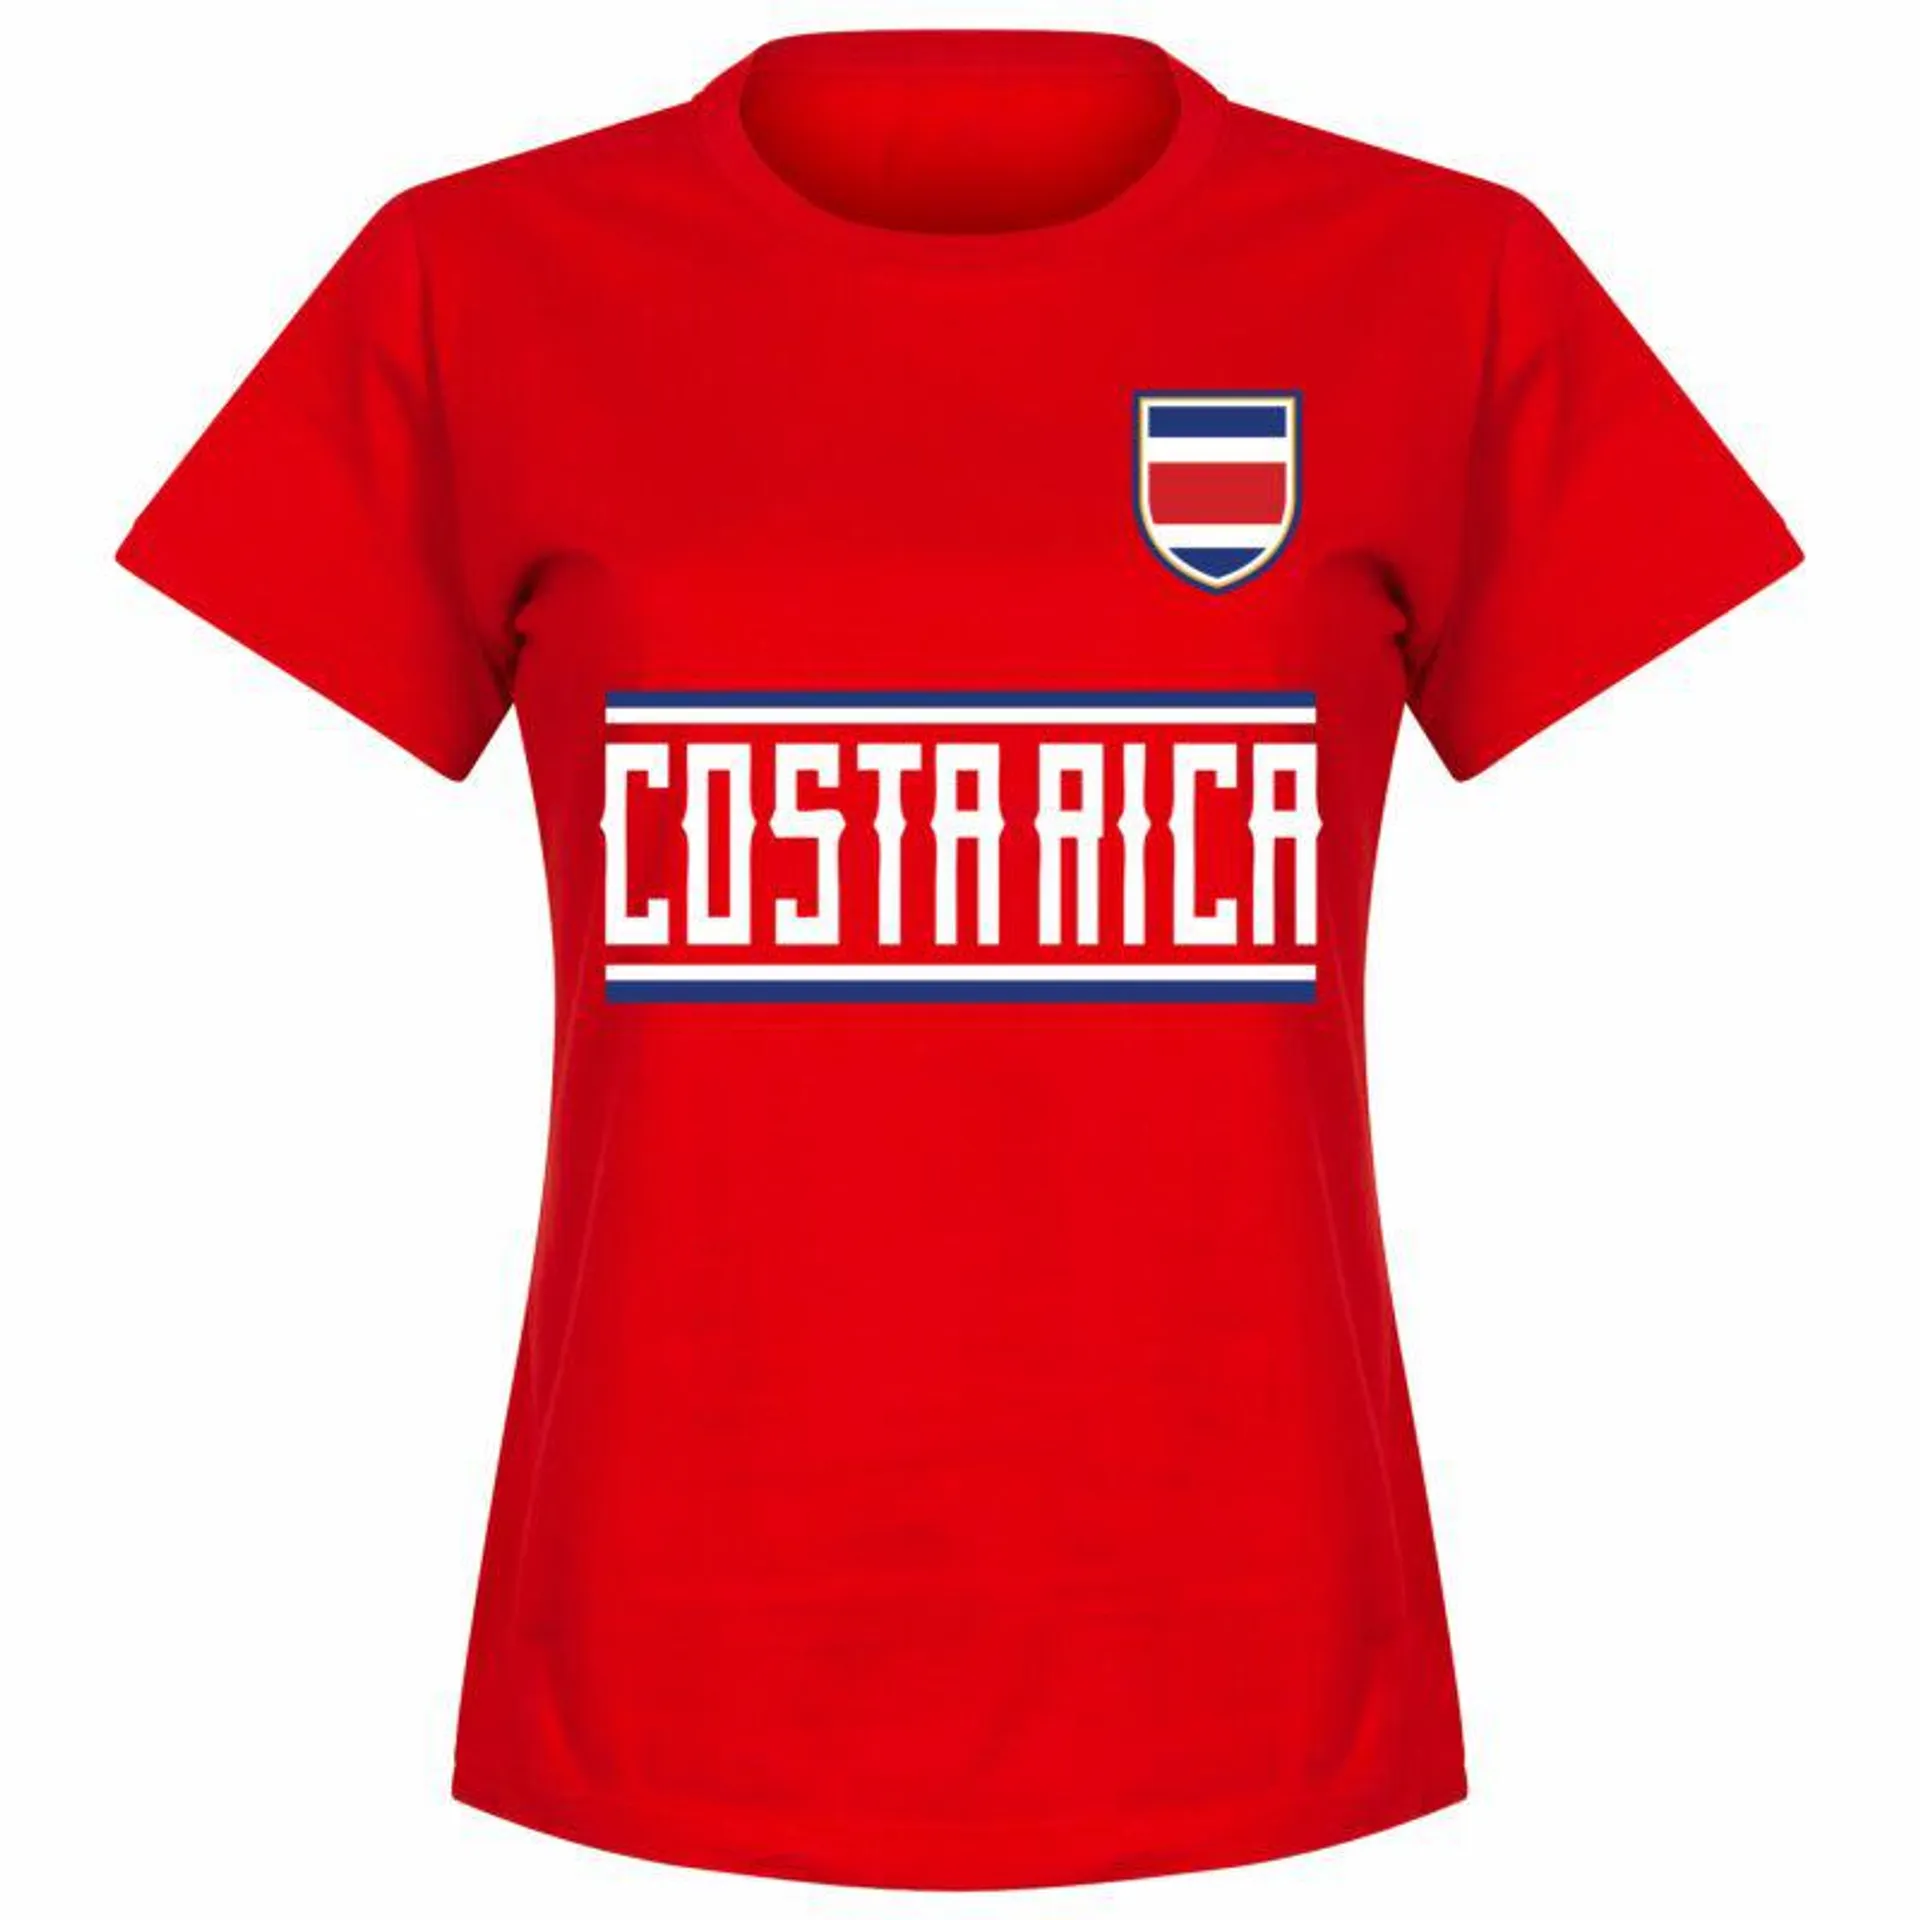 Costa Rica Team Womens T-shirt - Red